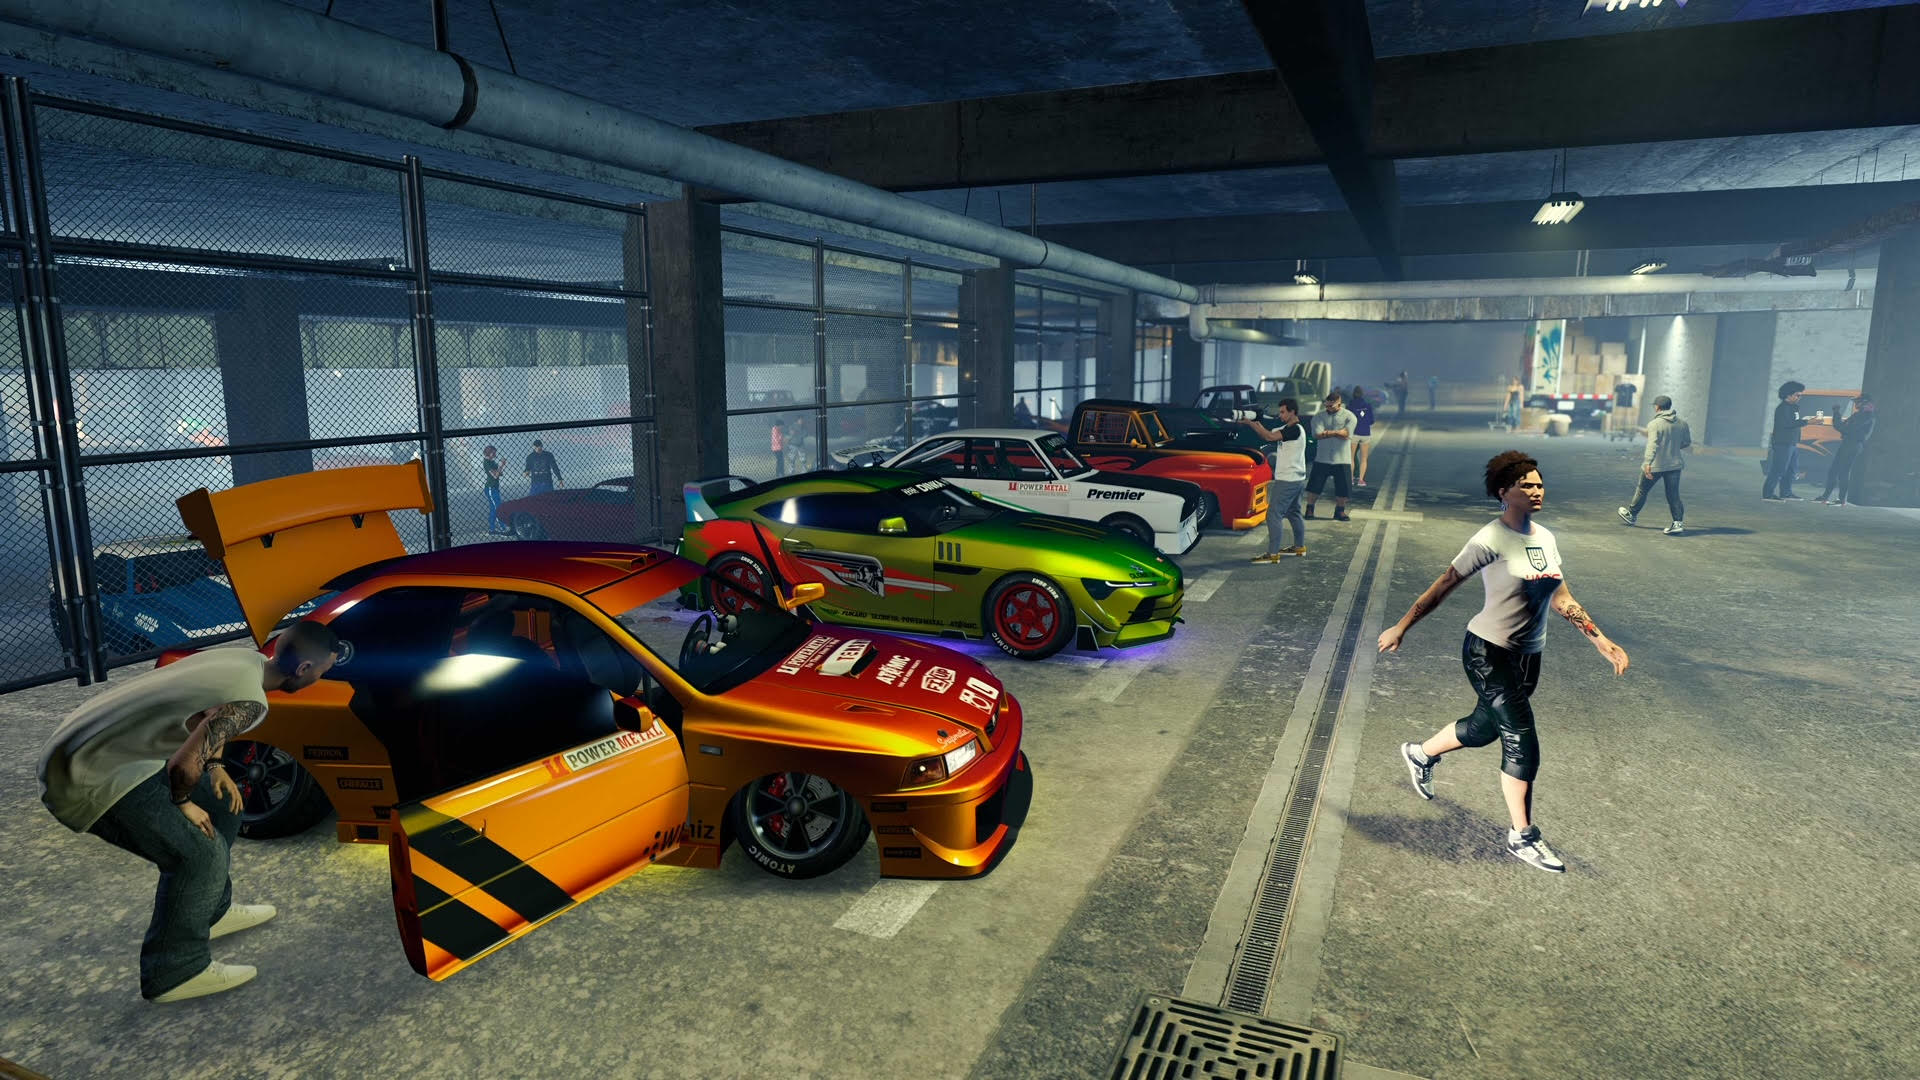 GTA V Online Screenshots and Gameplay Trailer Revealed